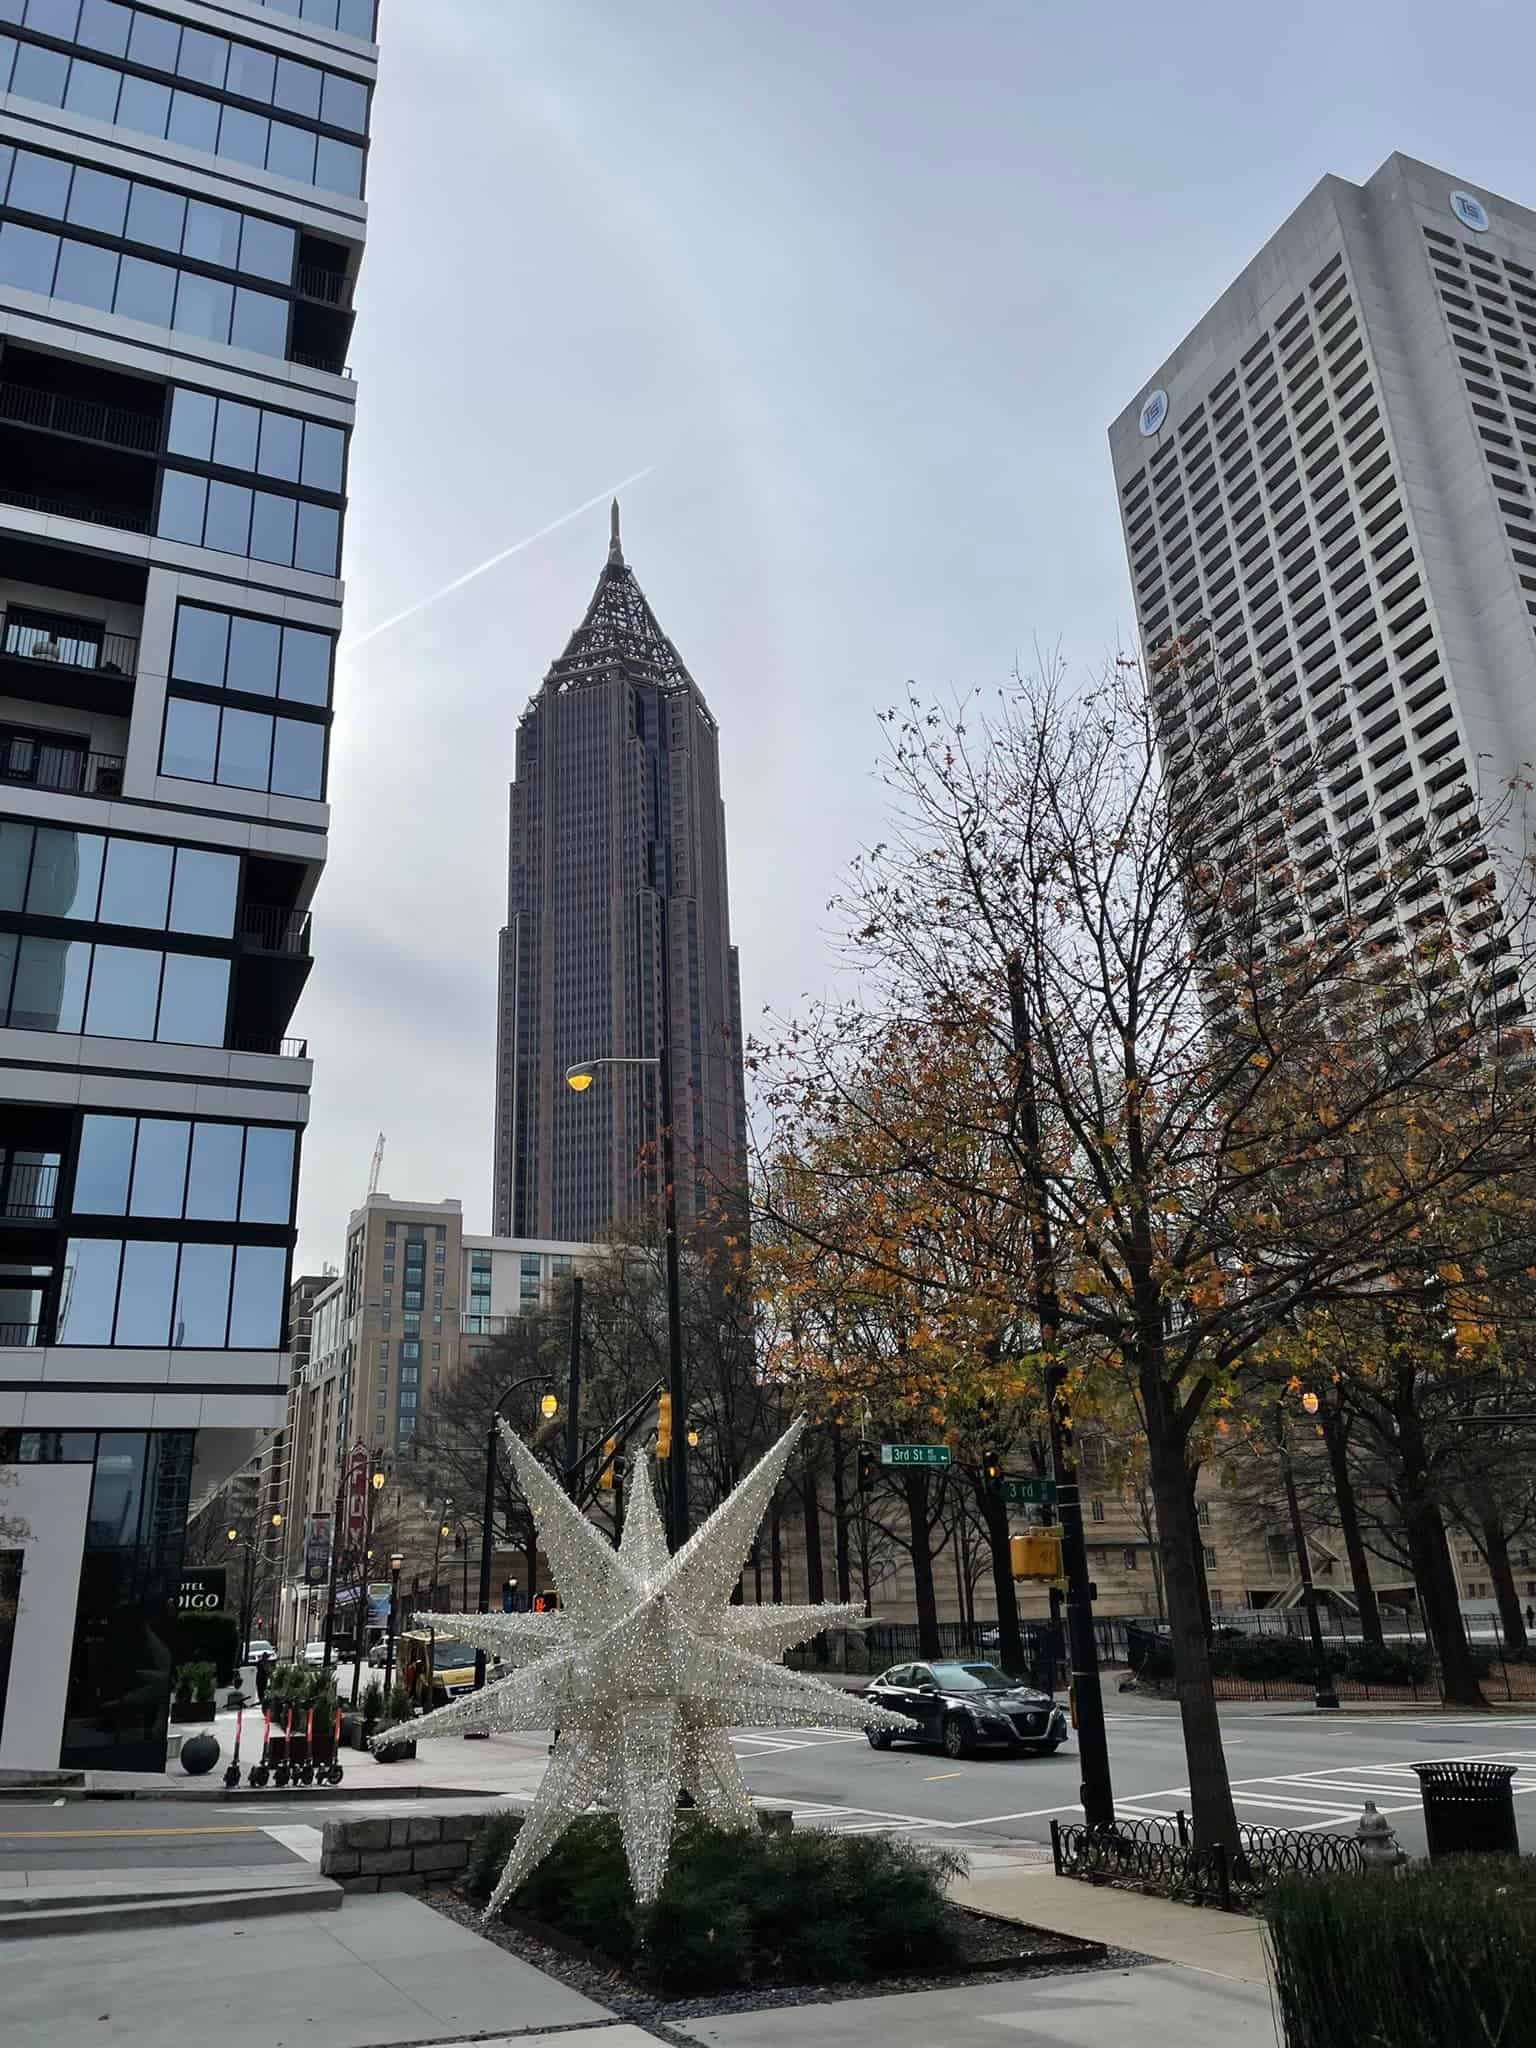 Is Atlanta safe? Midtown Atlanta